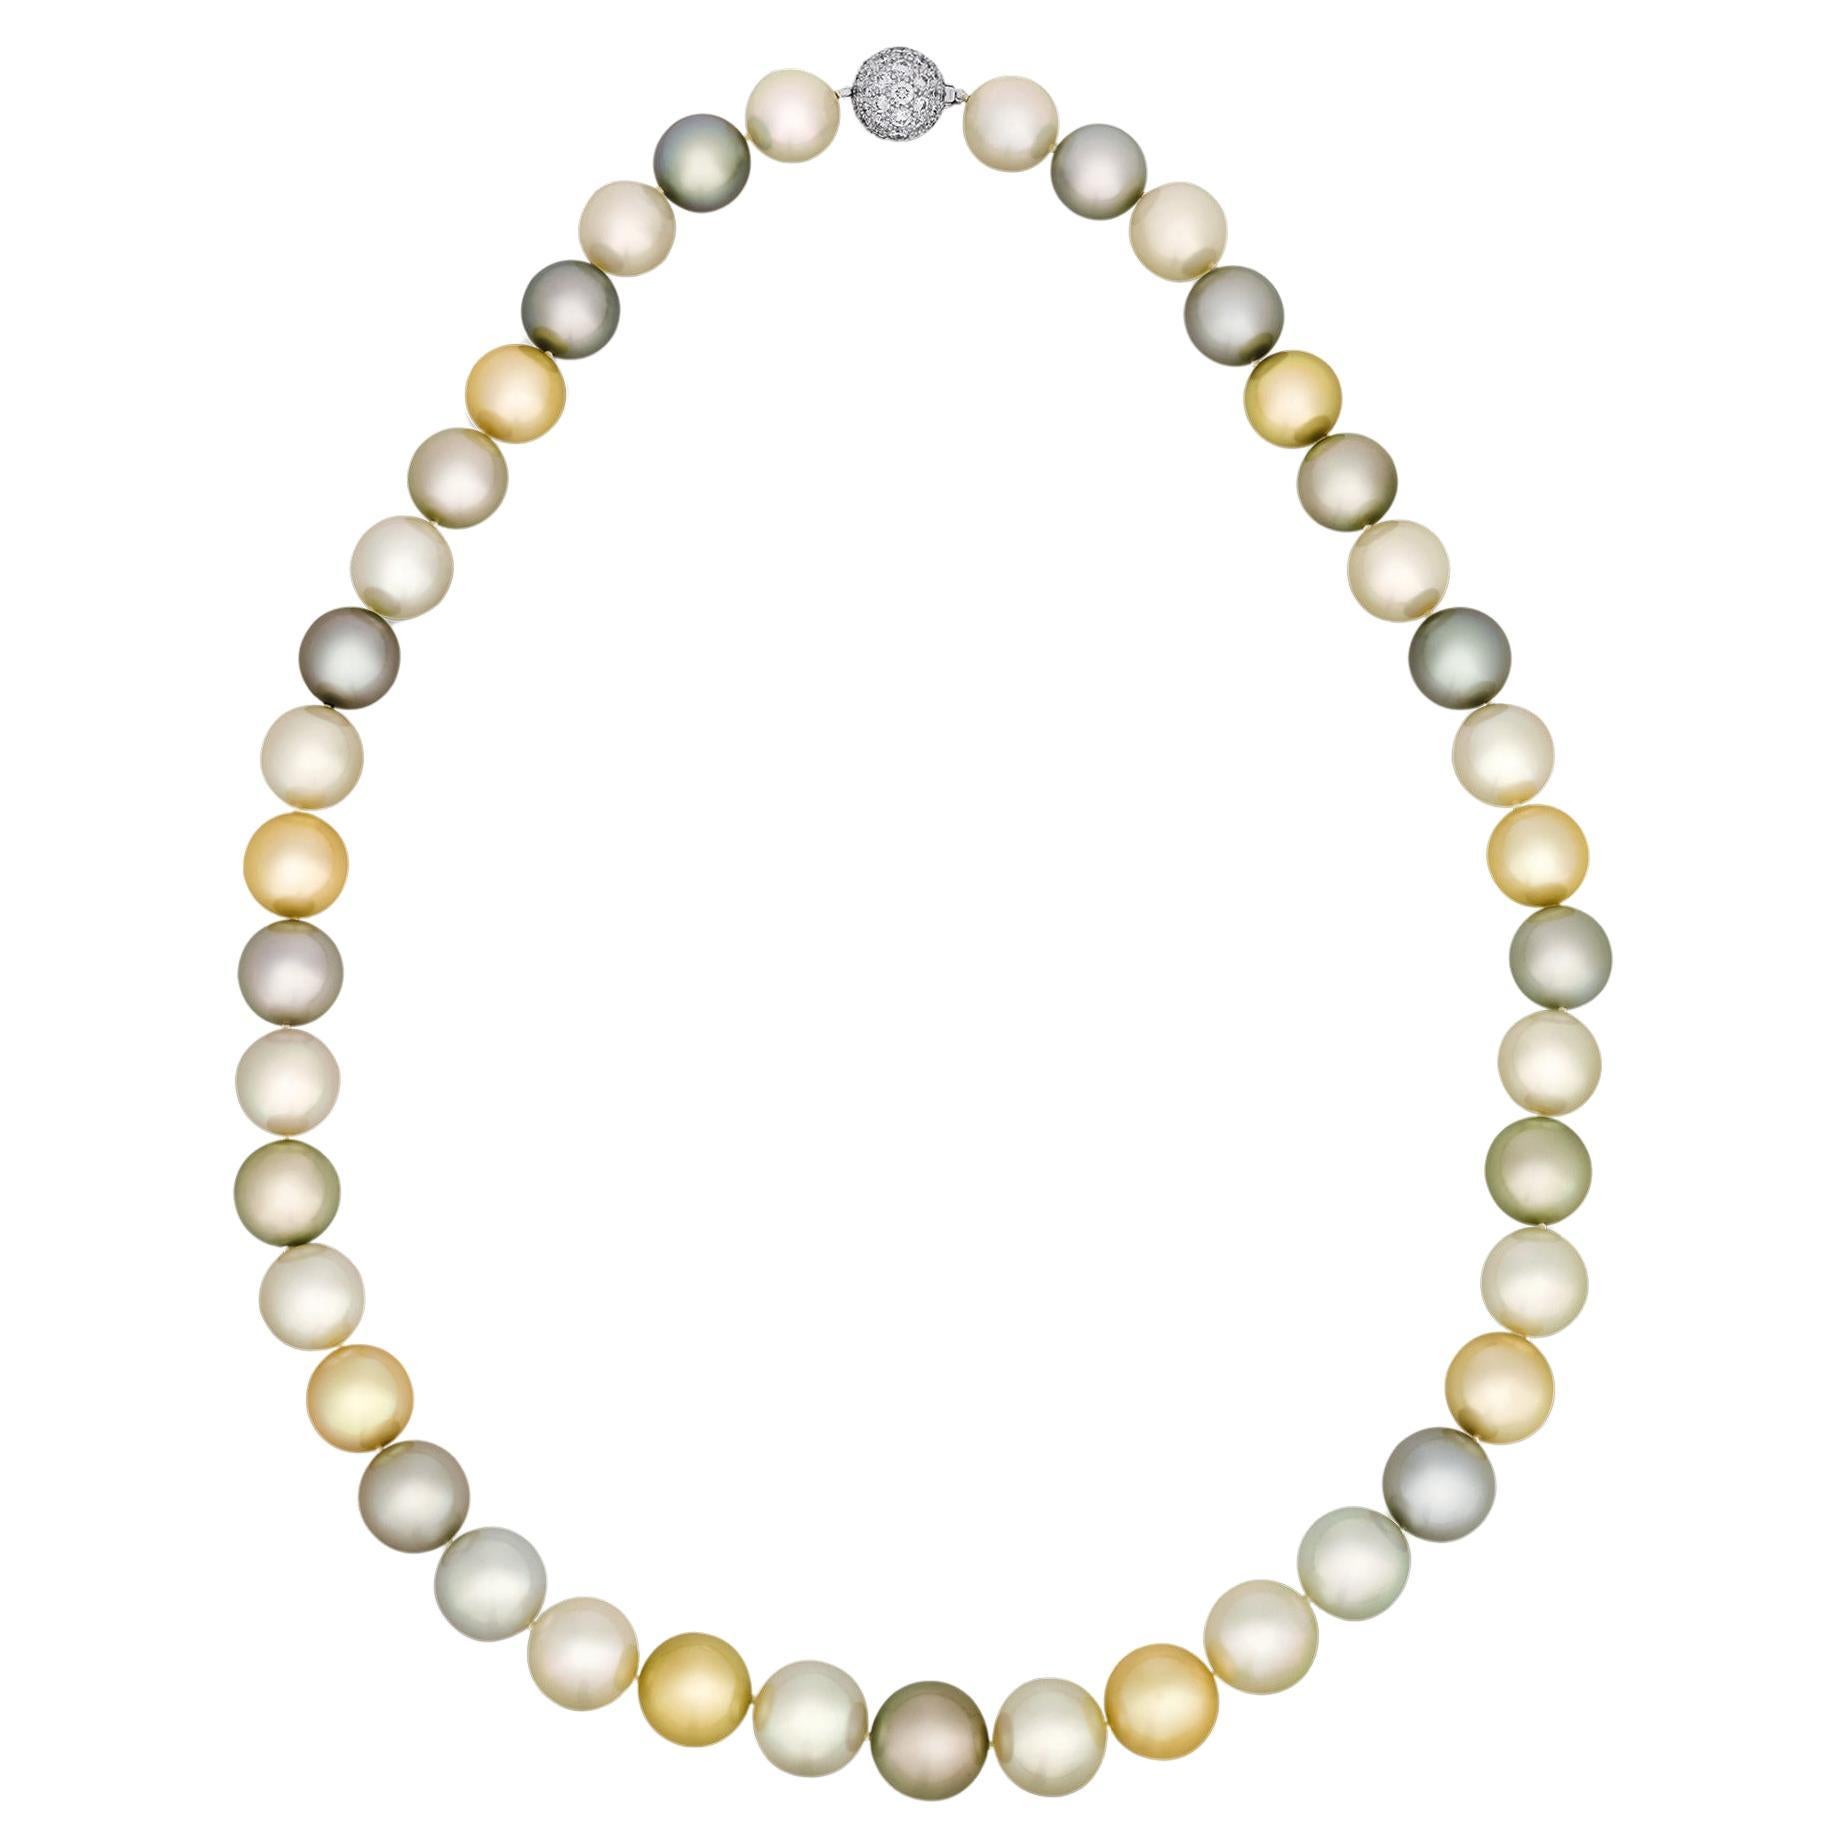 Tiffany & Co. Collier de perles des mers du Sud multicolores